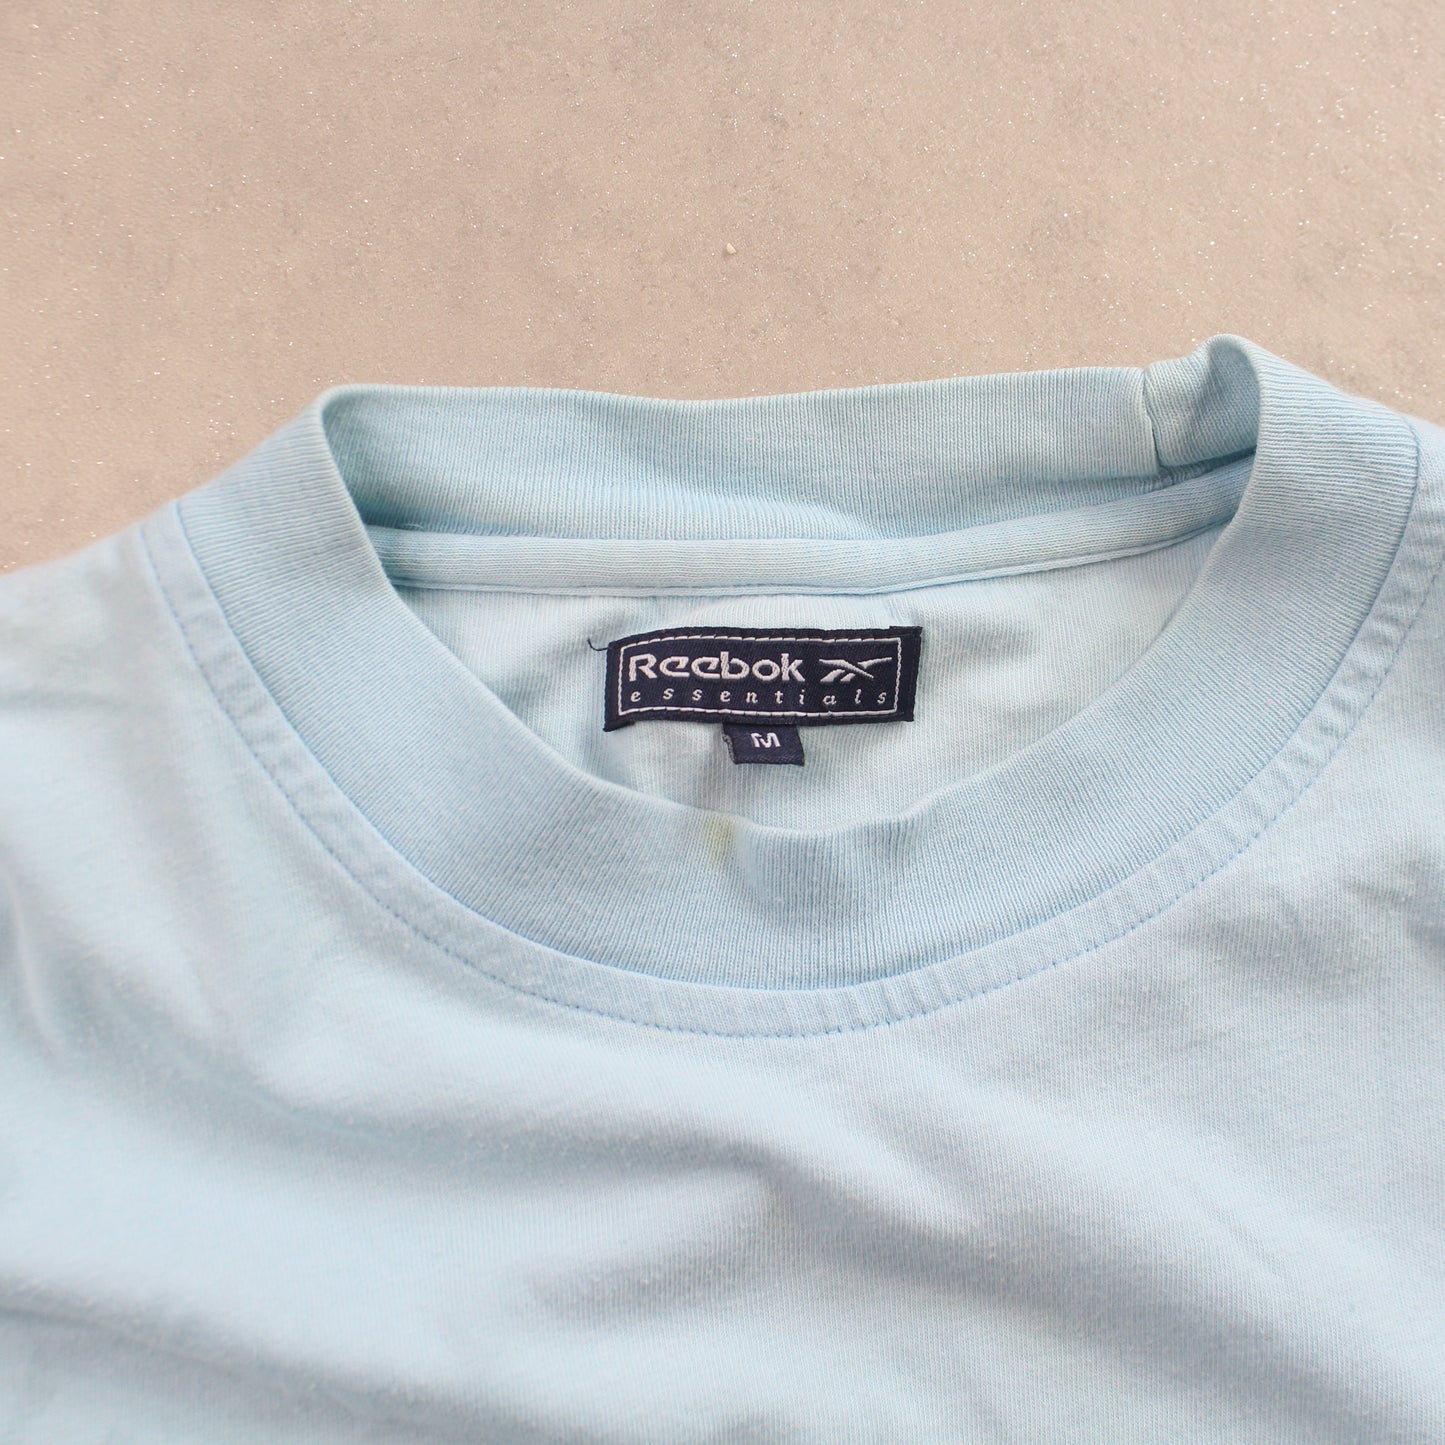 Vintage 90s Reebok T-Shirt Blue - (L)